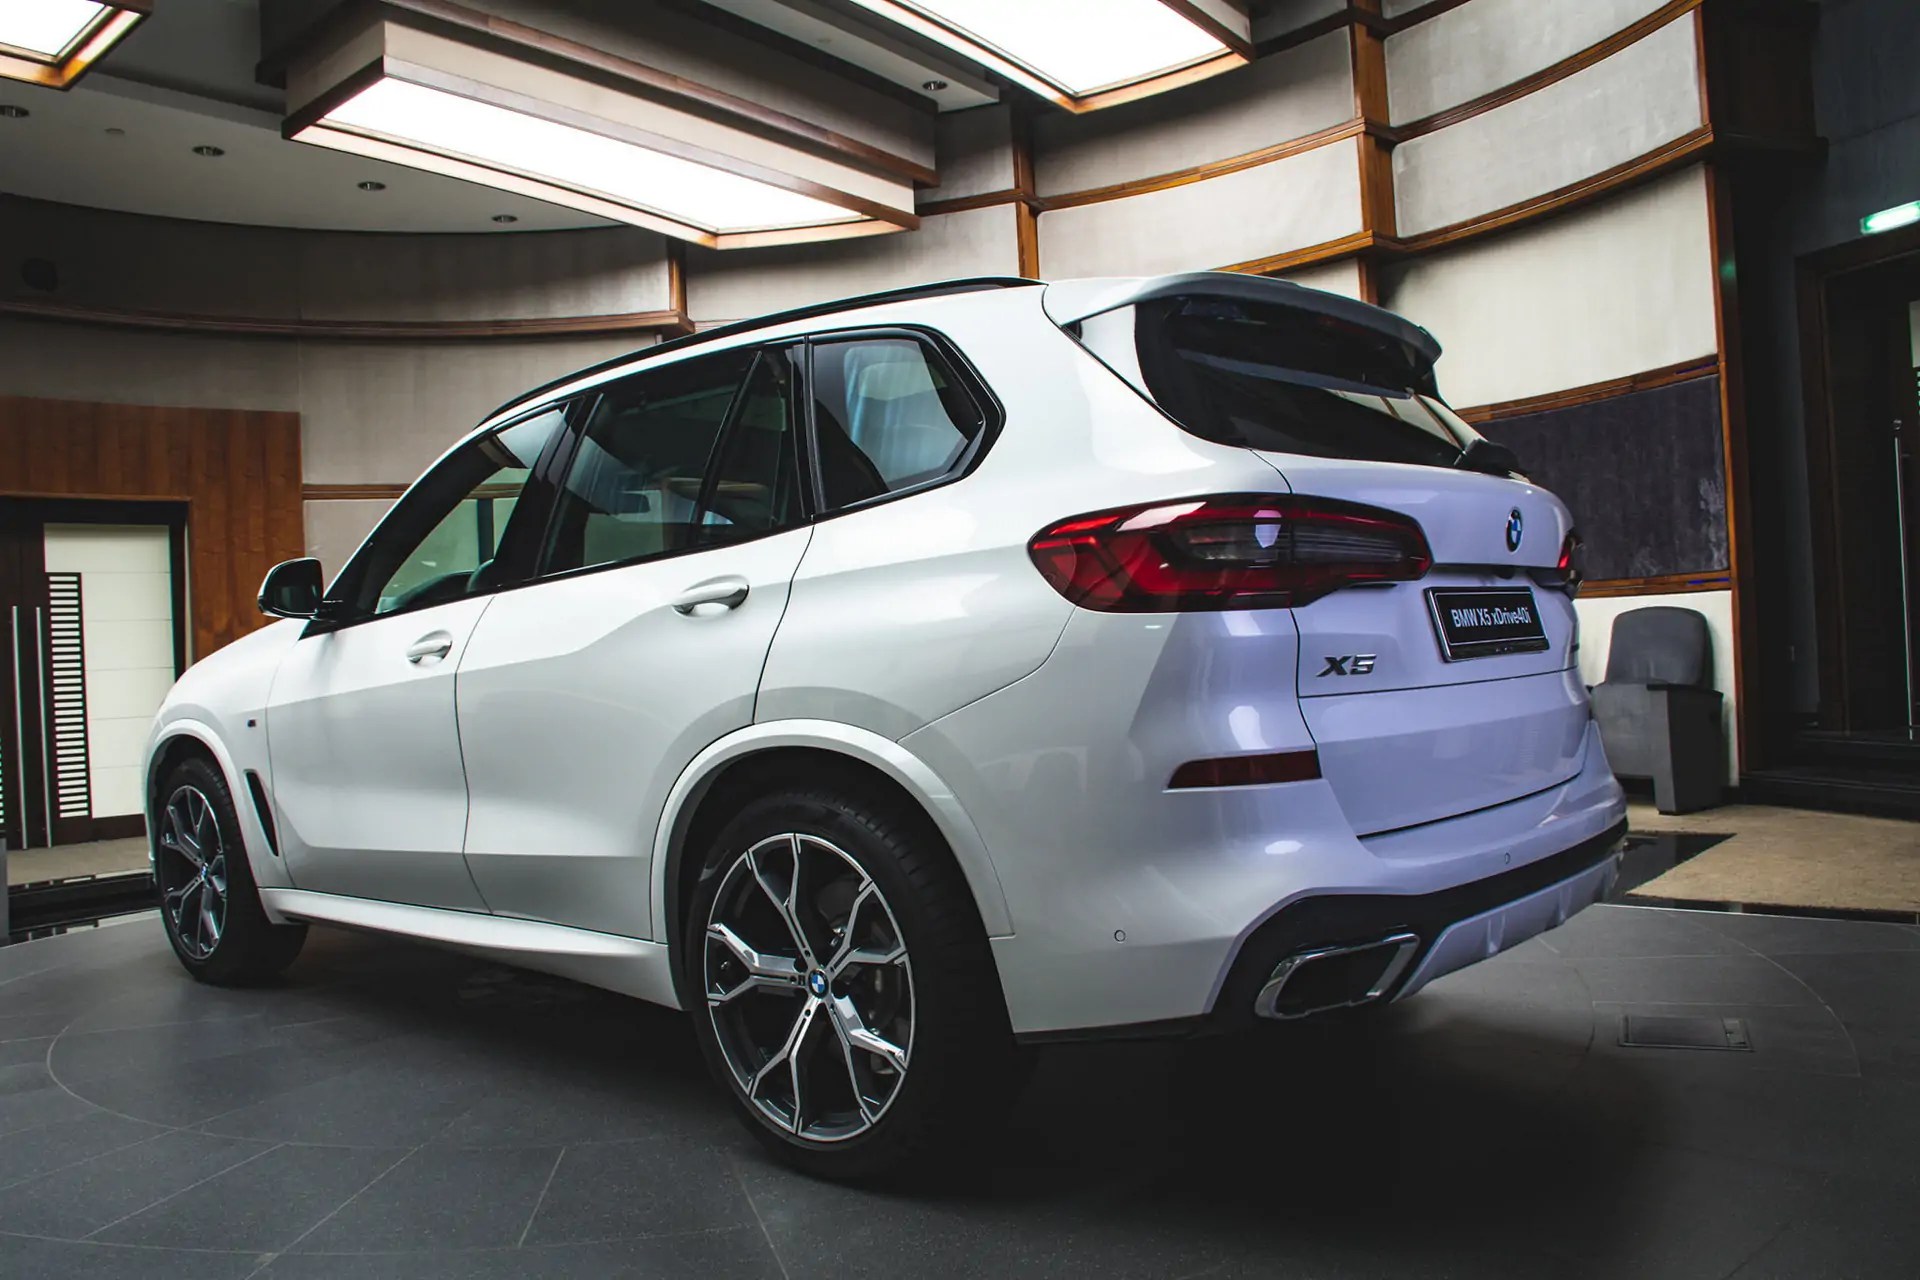 BMW أبو ظبي تختبر X5 وتكشف عن X DRIVE 40I  بترقيات جديده